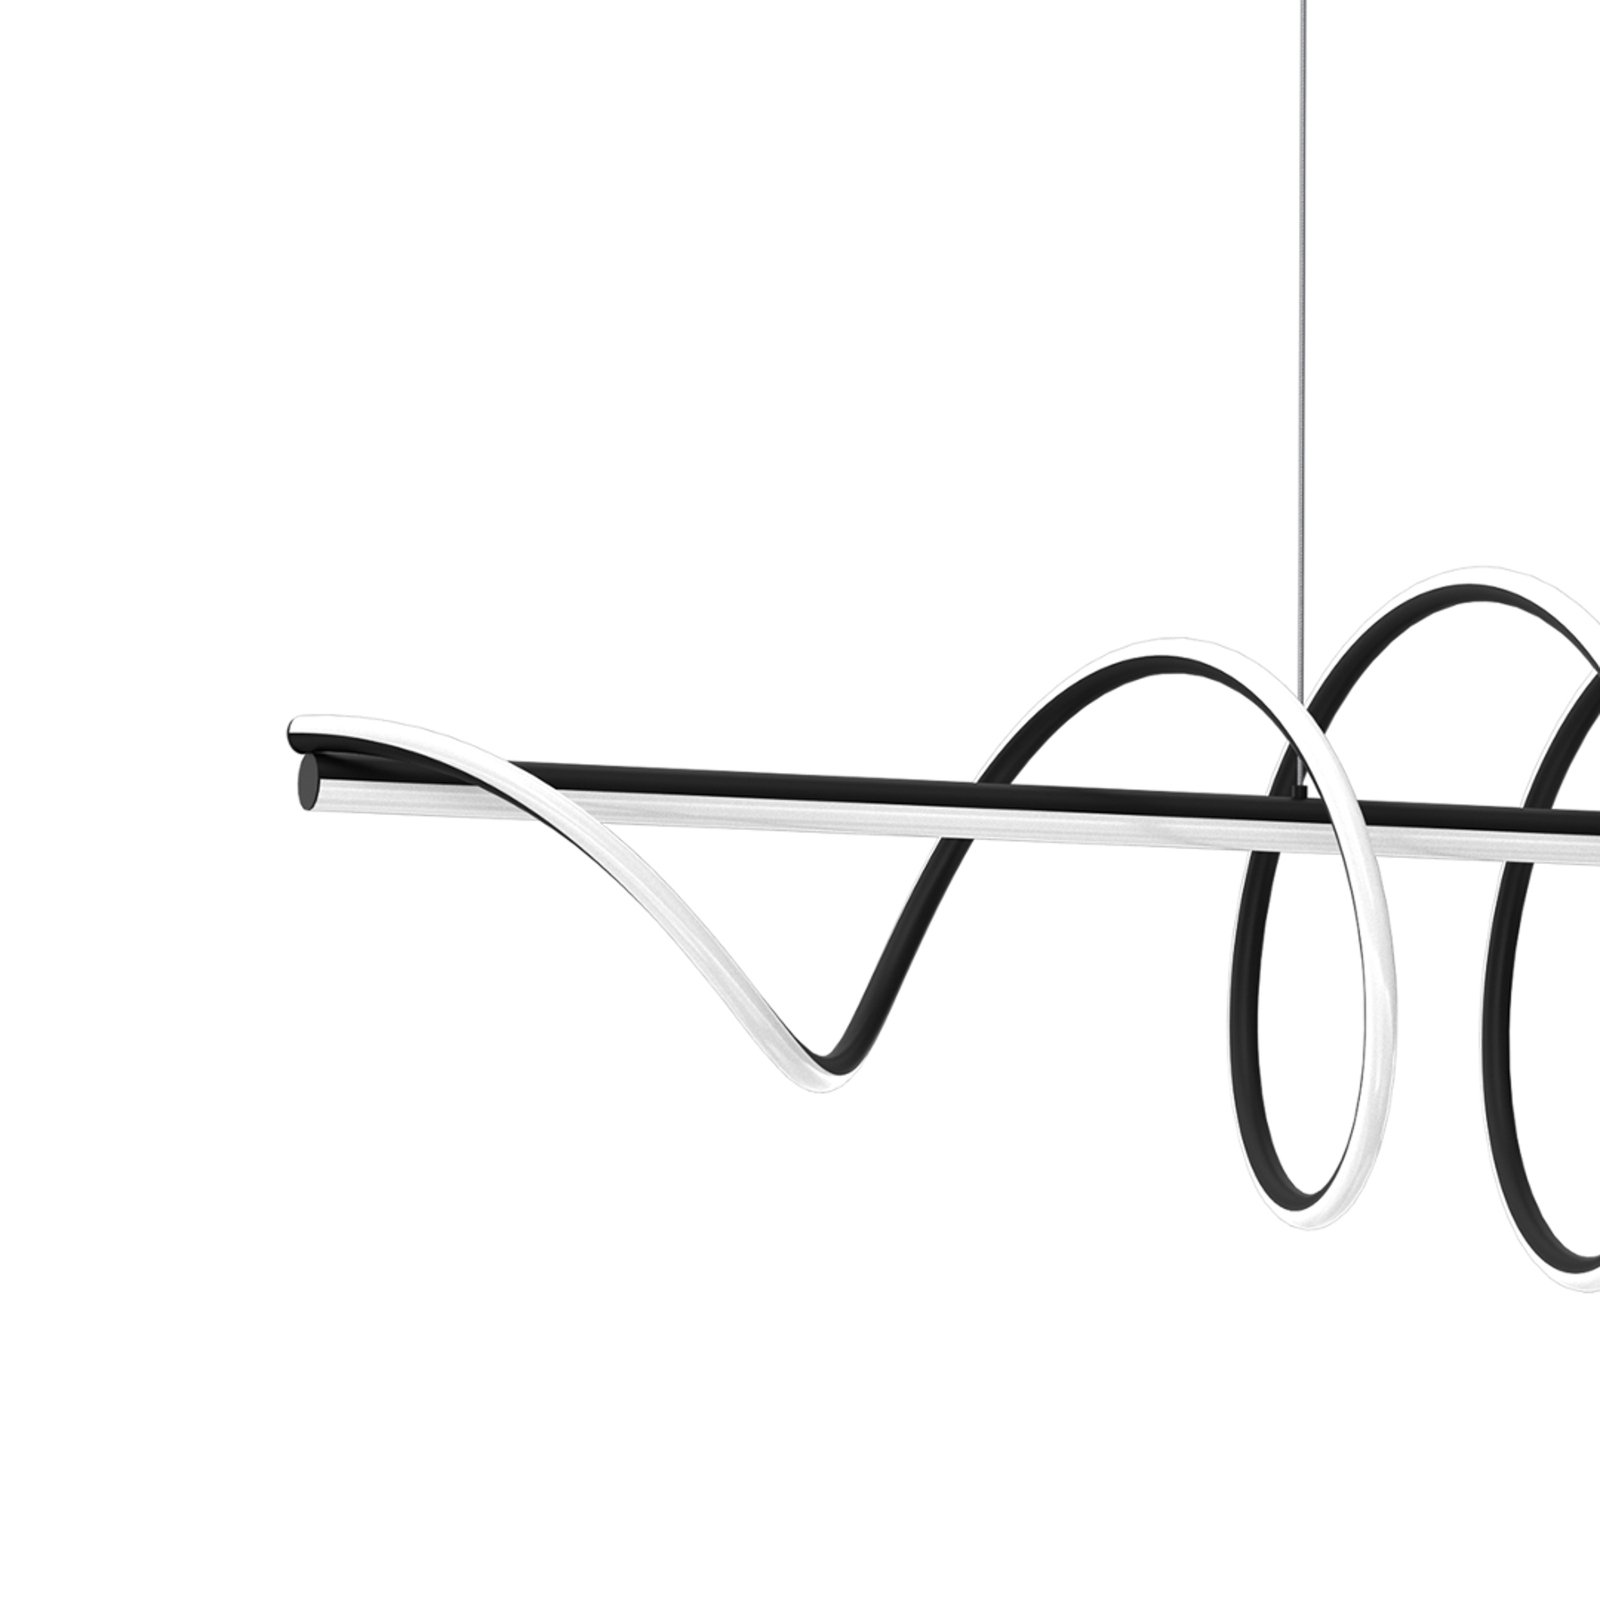 LED hanging light Twist, black plastic, 30 W, length 110 cm